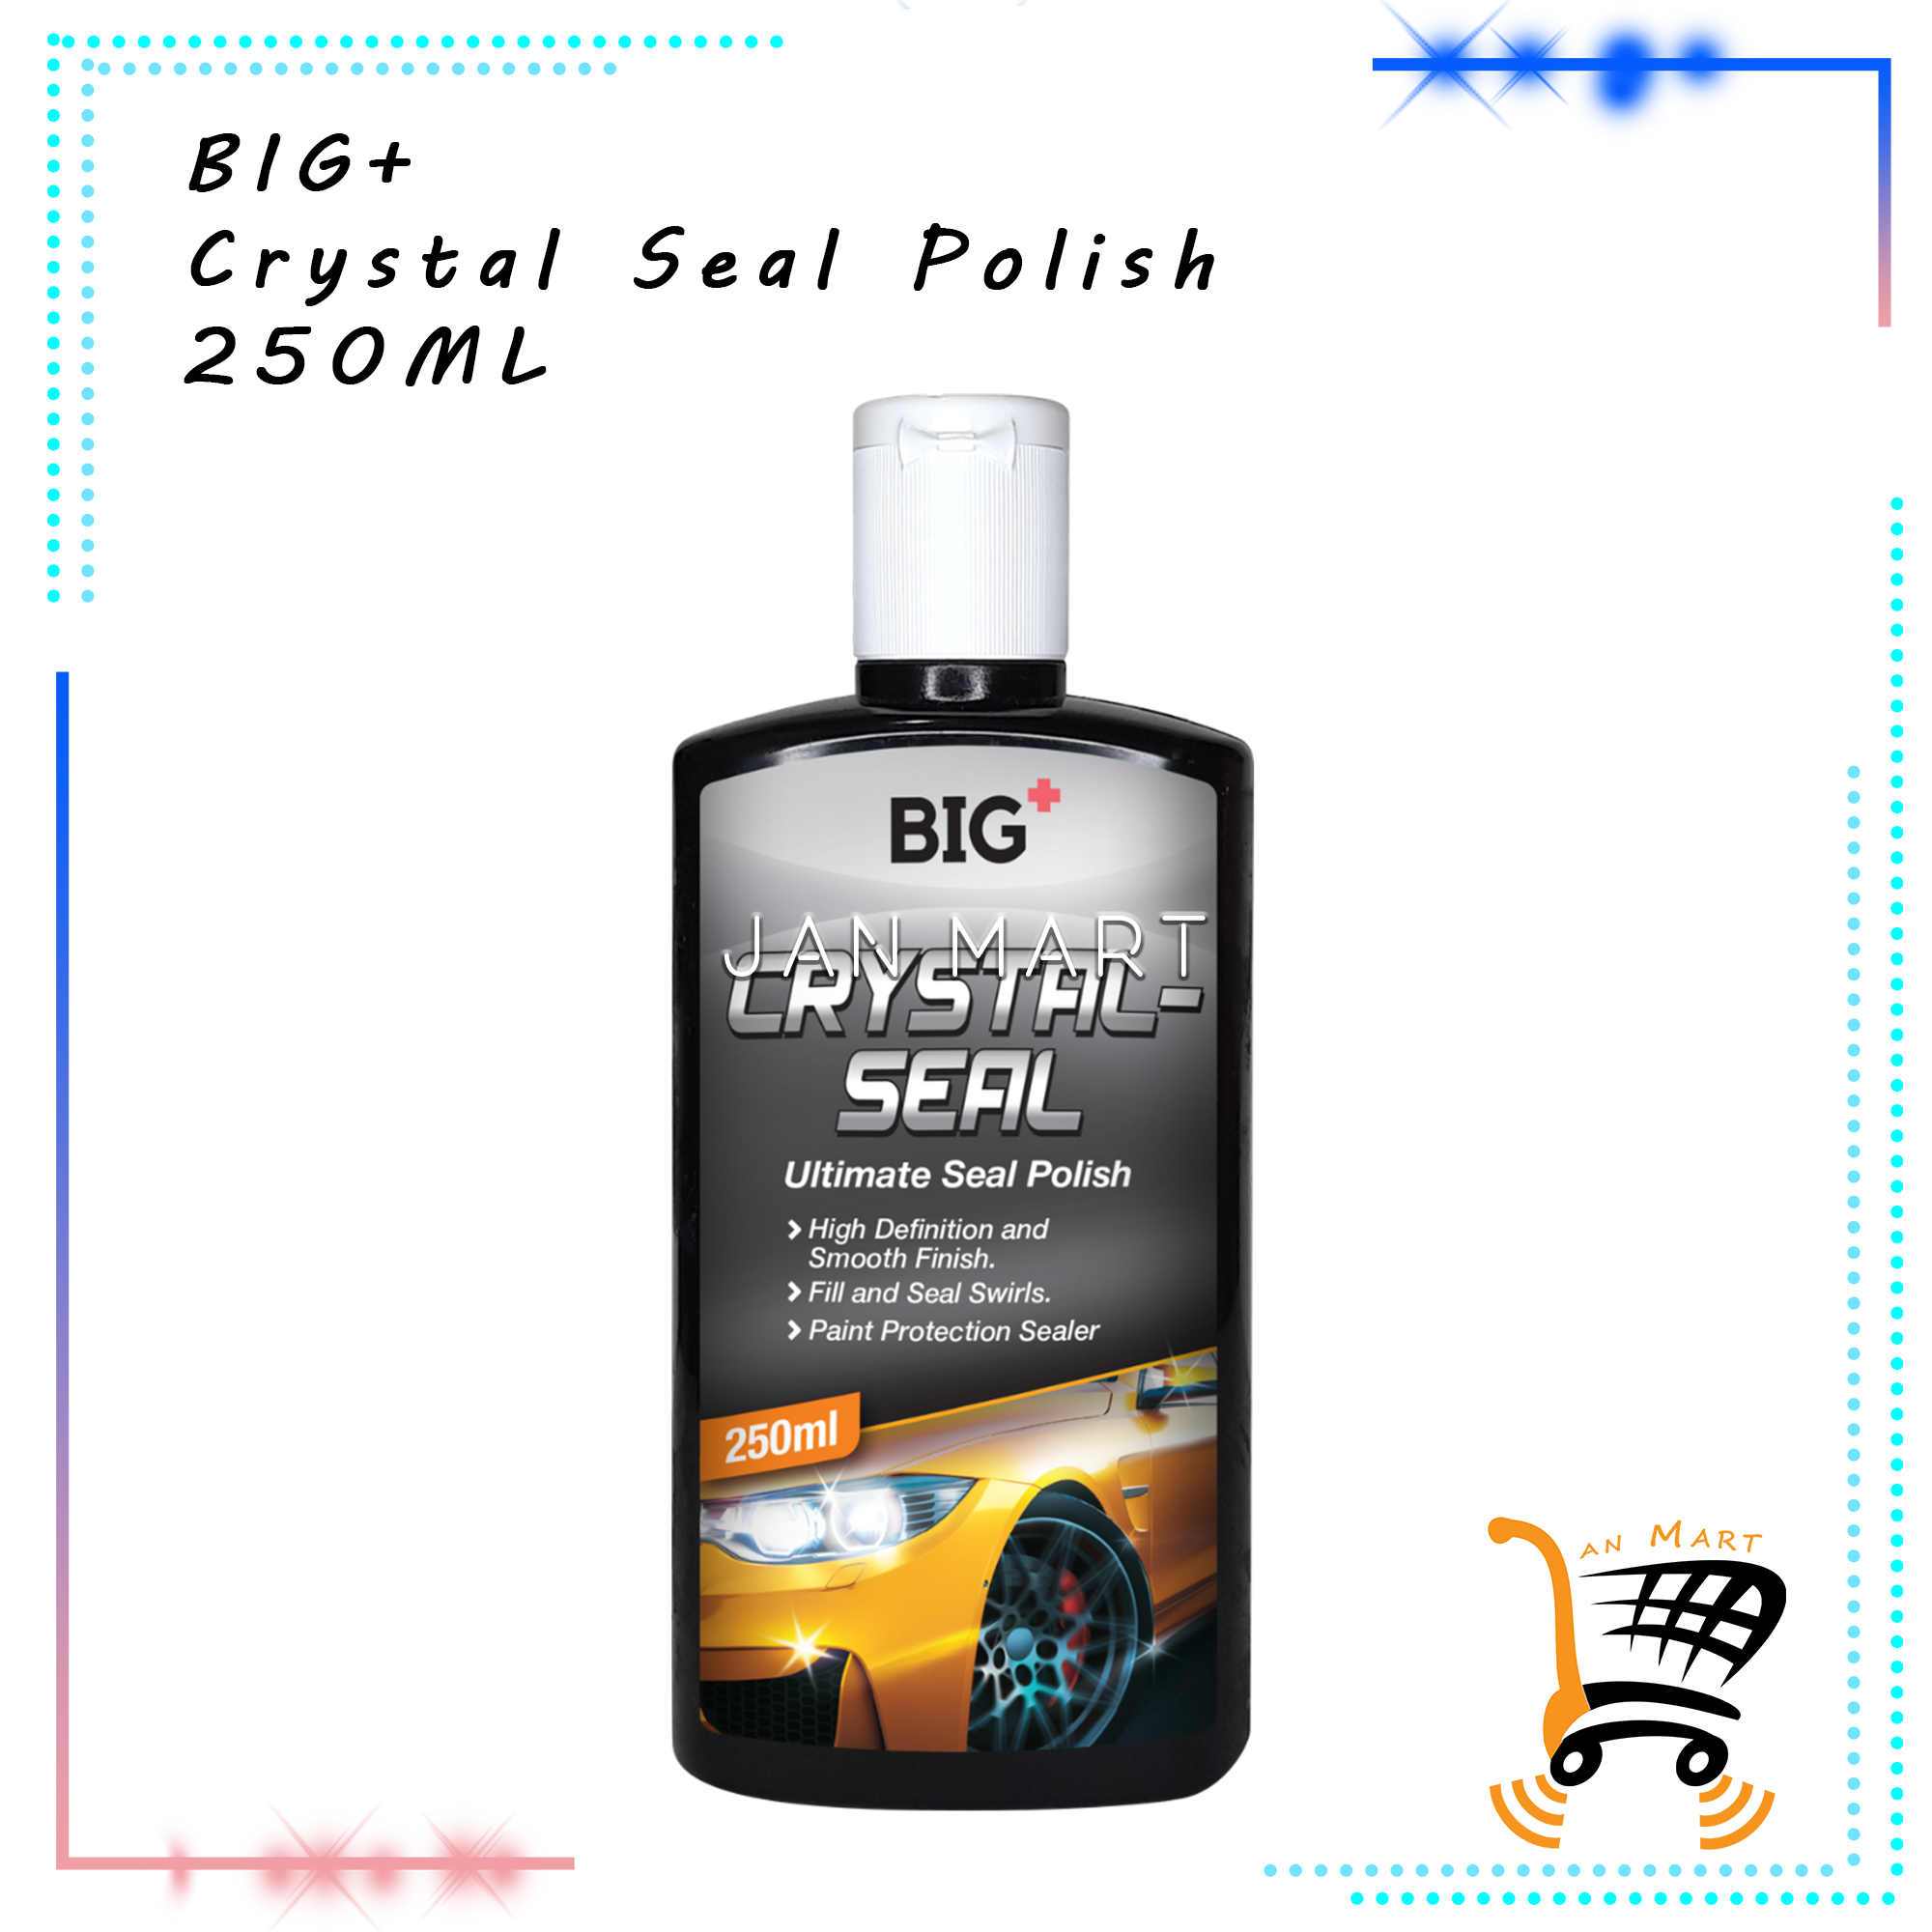 BIG+ Crystal Seal Polish 250ML